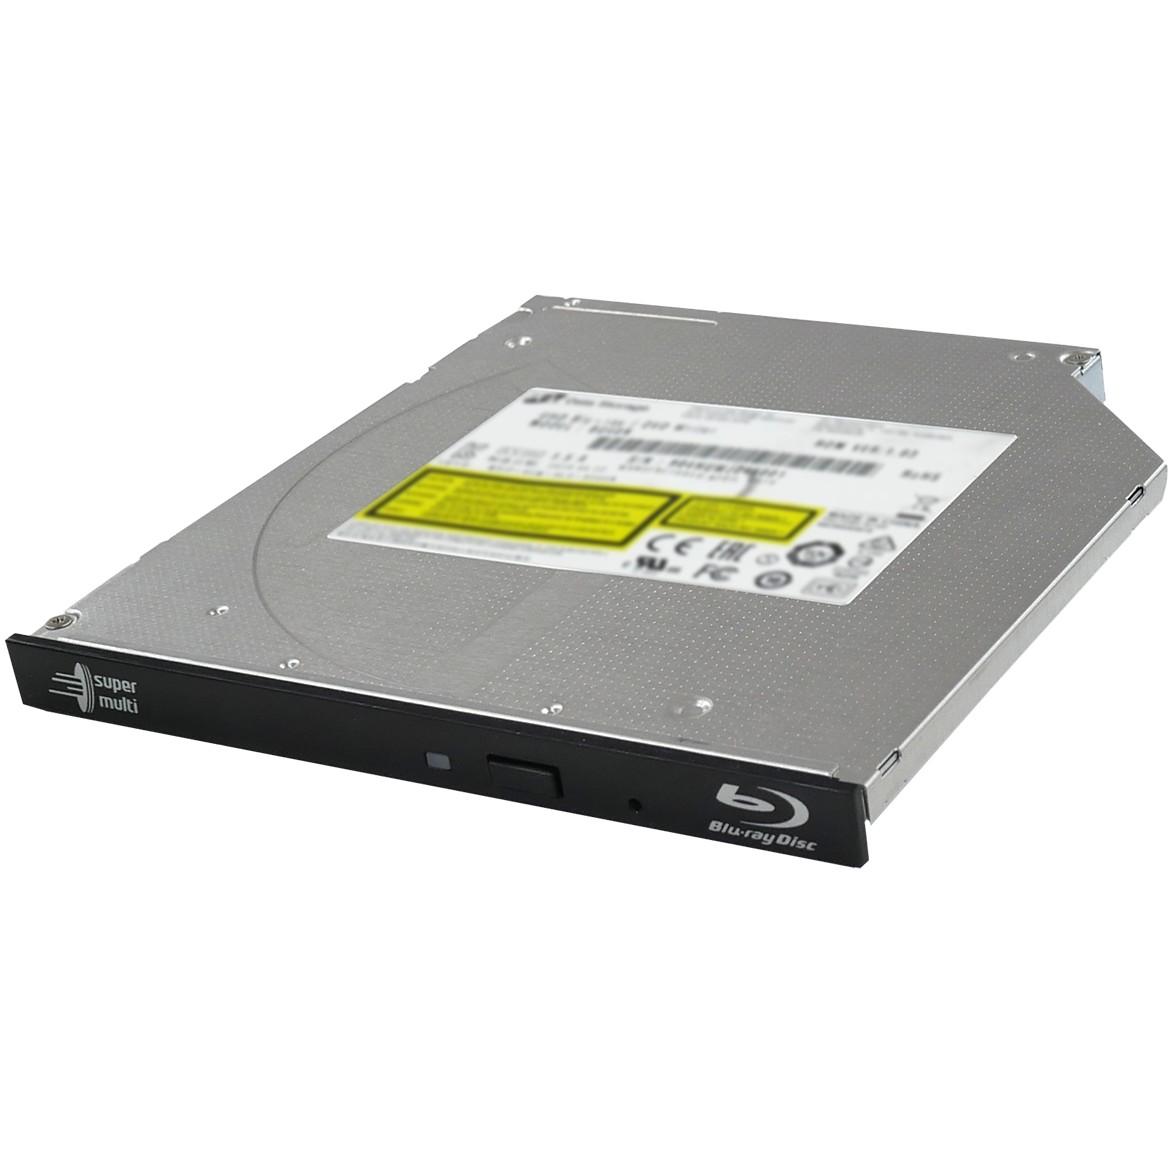 Hitachi-LG Super Multi UHD-BD Writer optical disc drive - BU40N